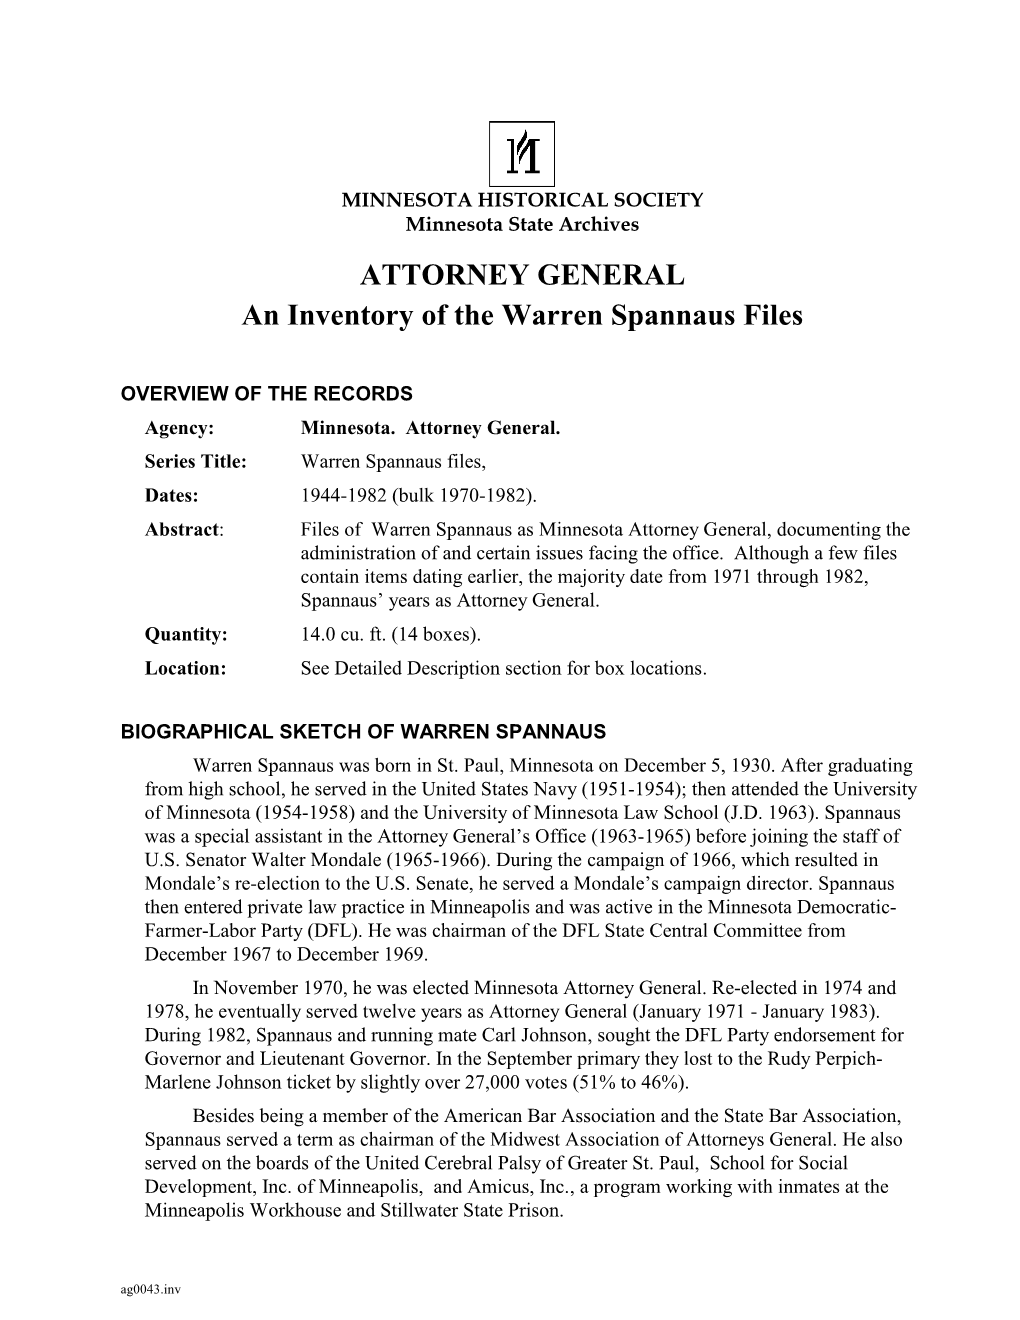 ATTORNEY GENERAL: an Inventory of the Warren Spannaus Files